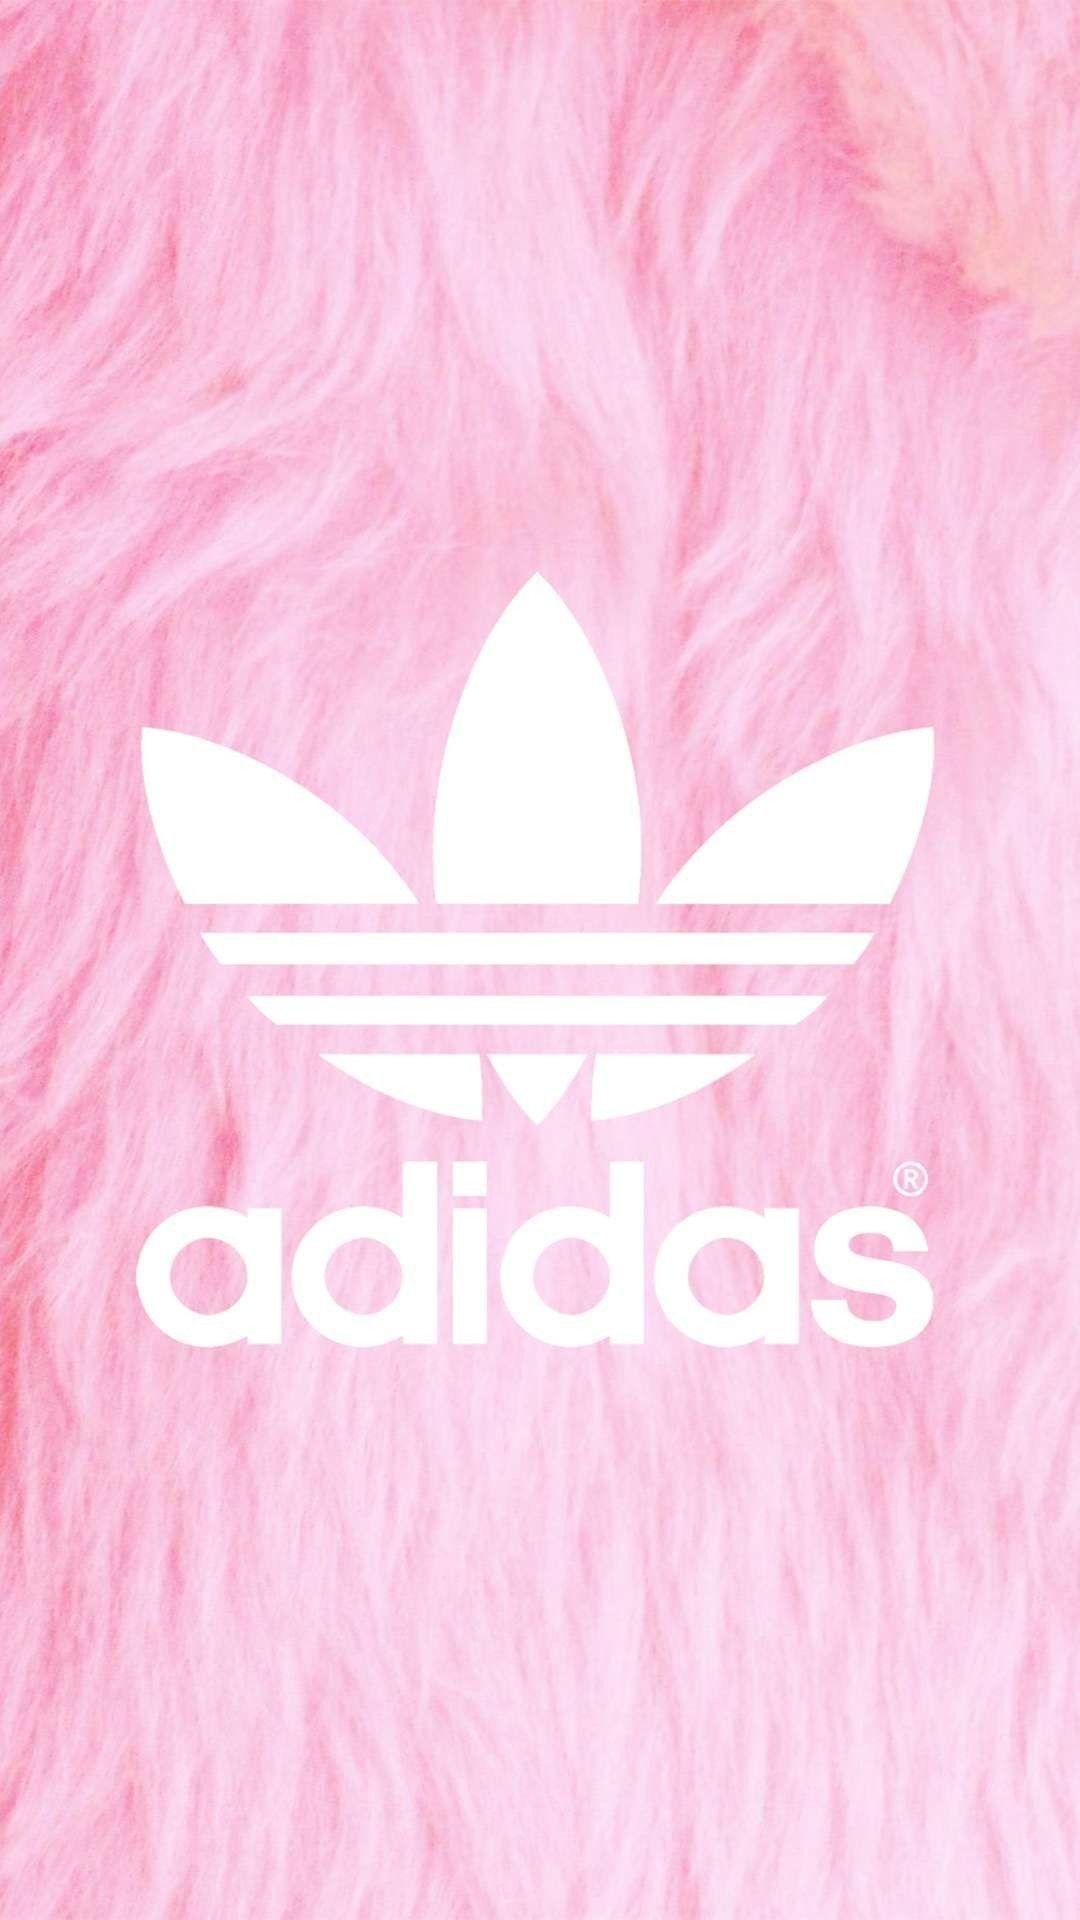 Adidas Girls Wallpapers - Top Free